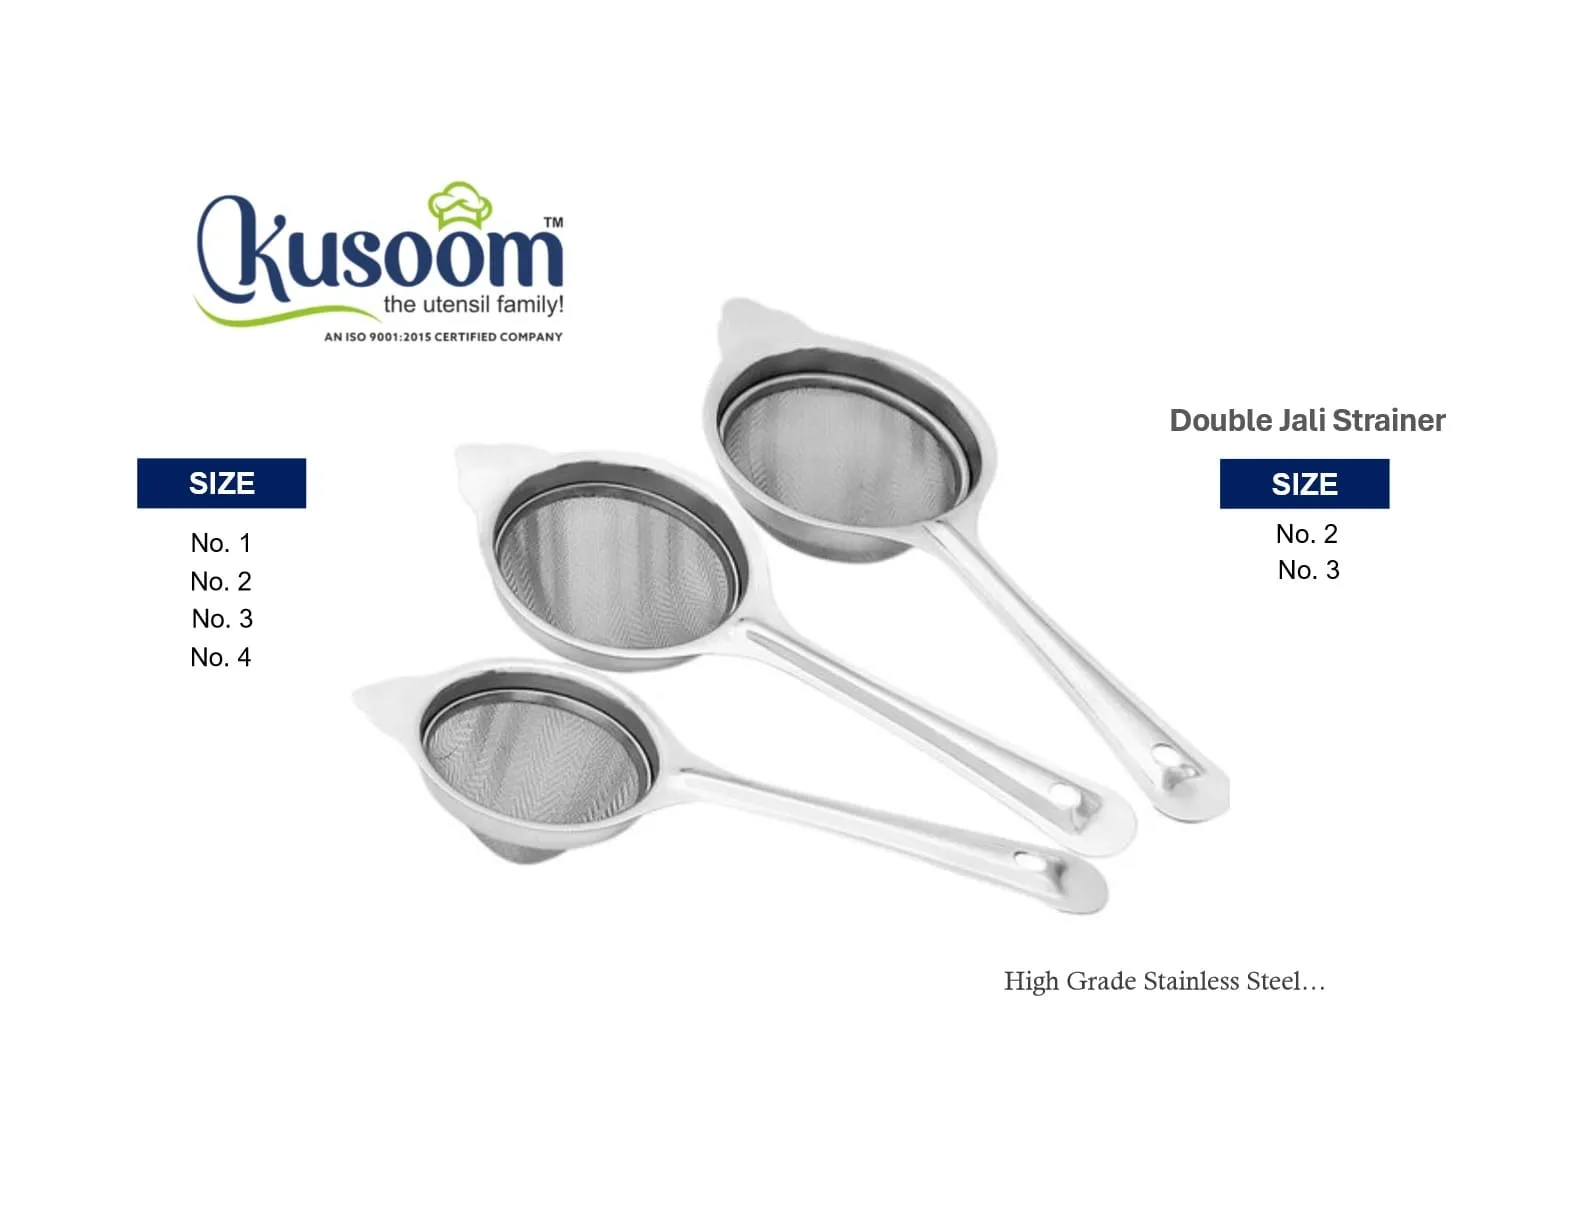 Kusoom Products